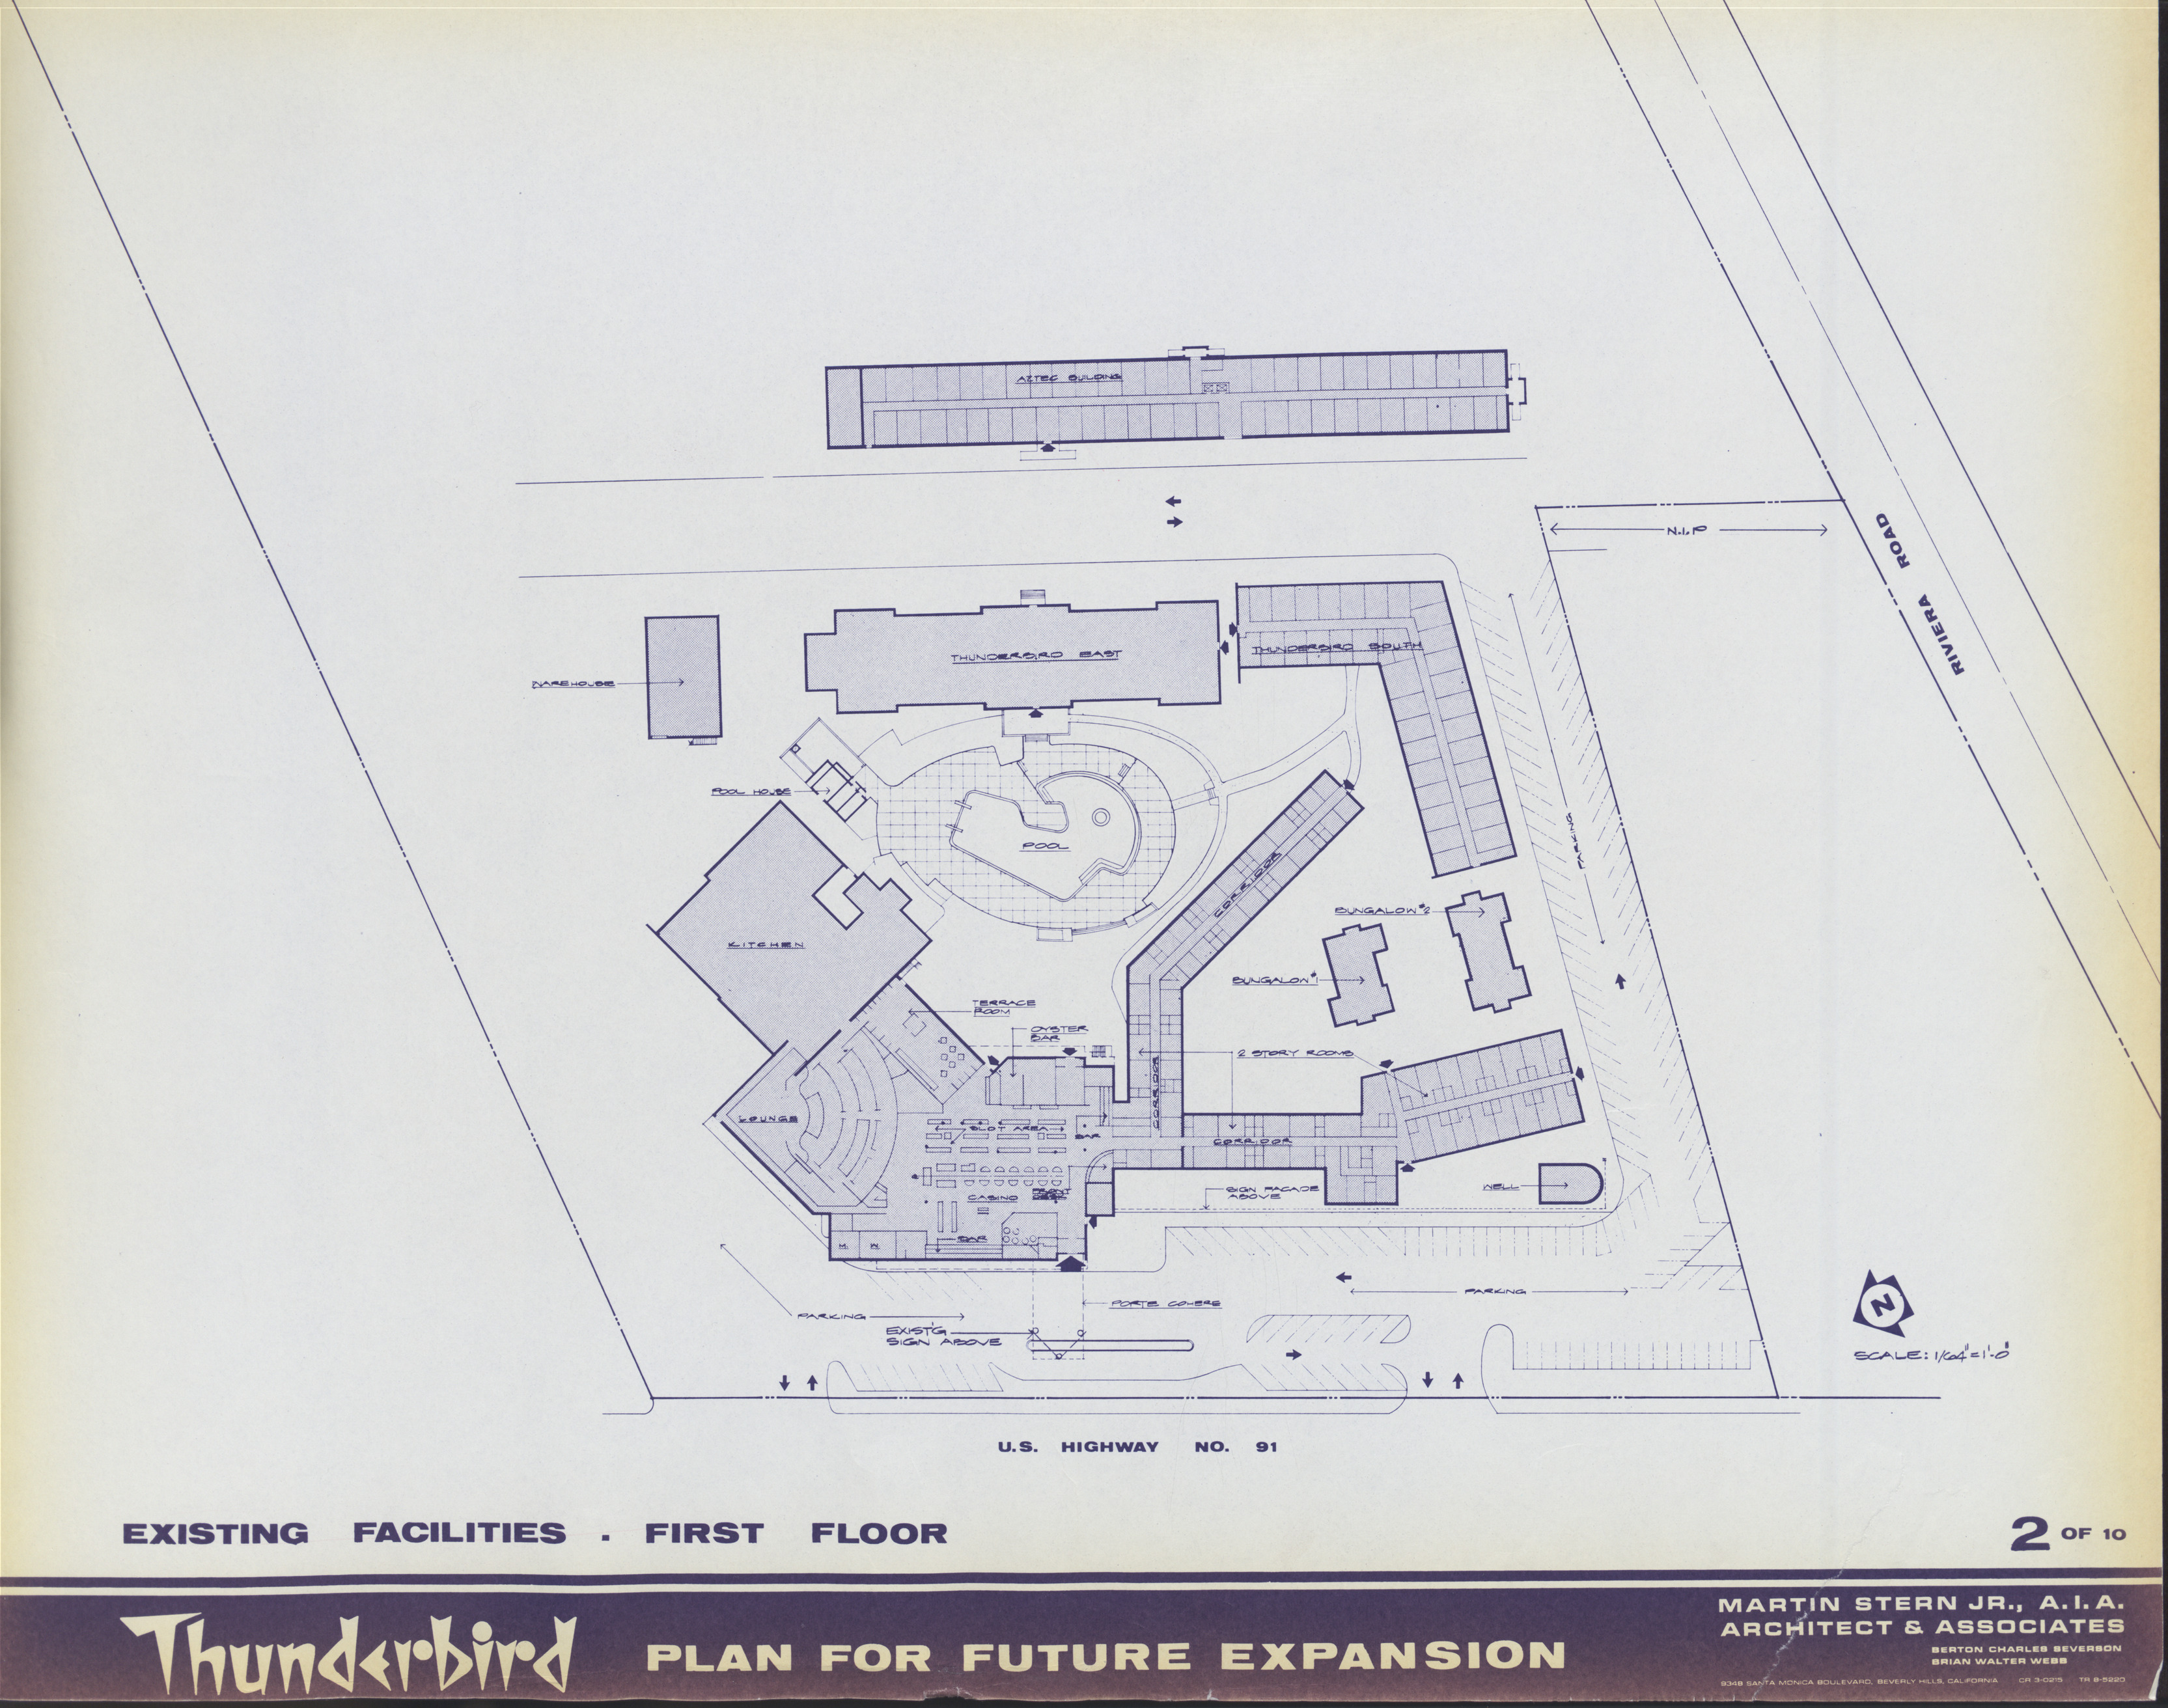 Thunderbird Plan for Future Expansion Proposal, image 2